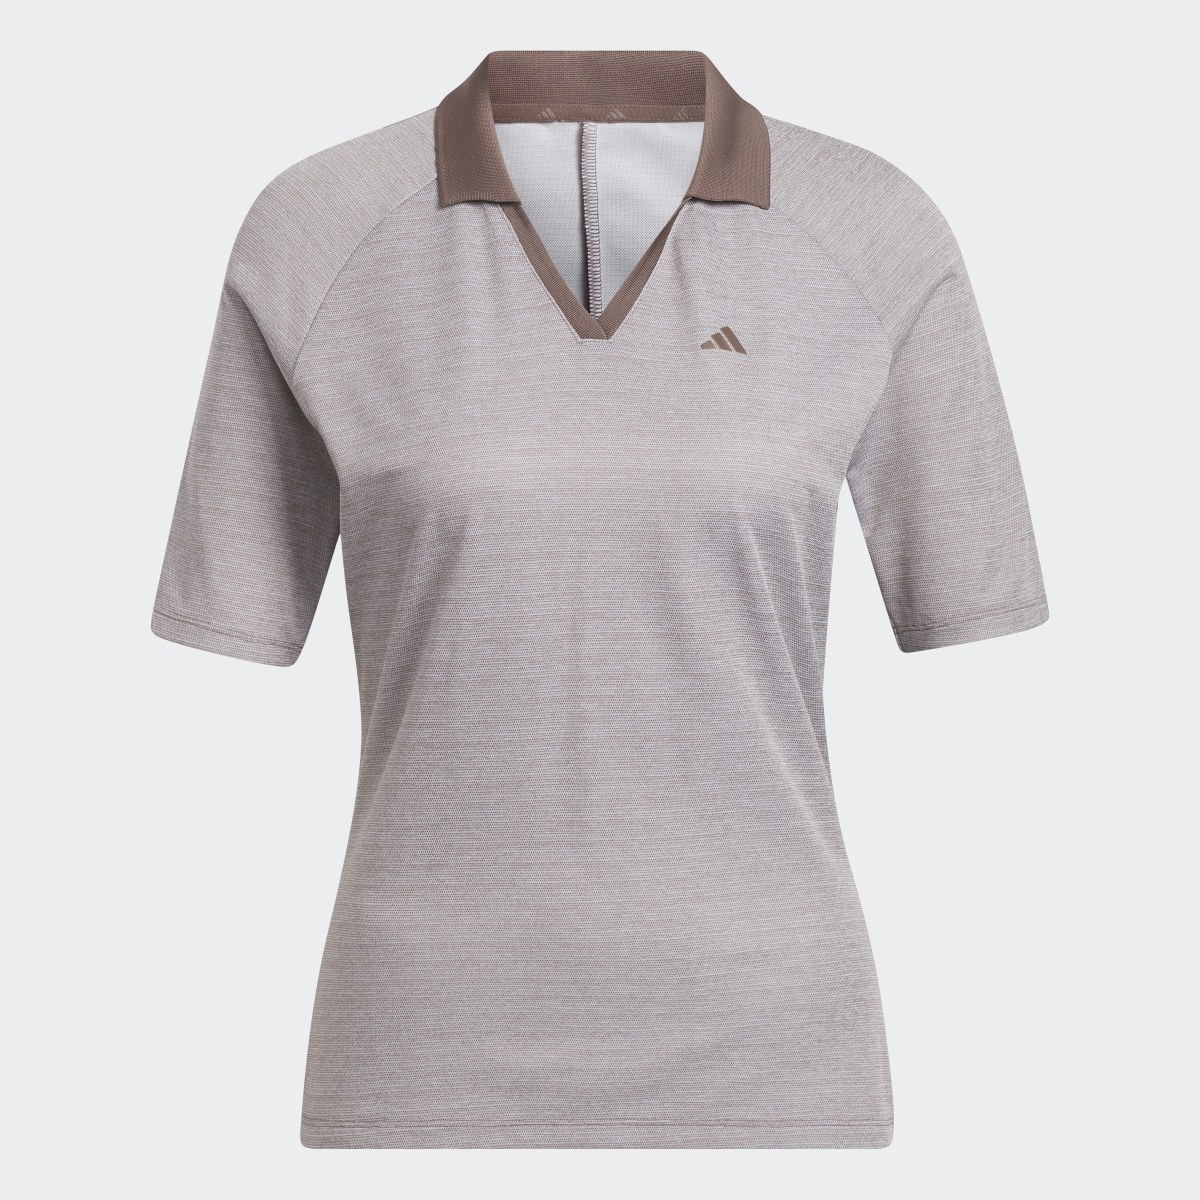 Adidas Ultimate365 Tour No-Show Half-Sleeve Golf Polo Shirt. 5